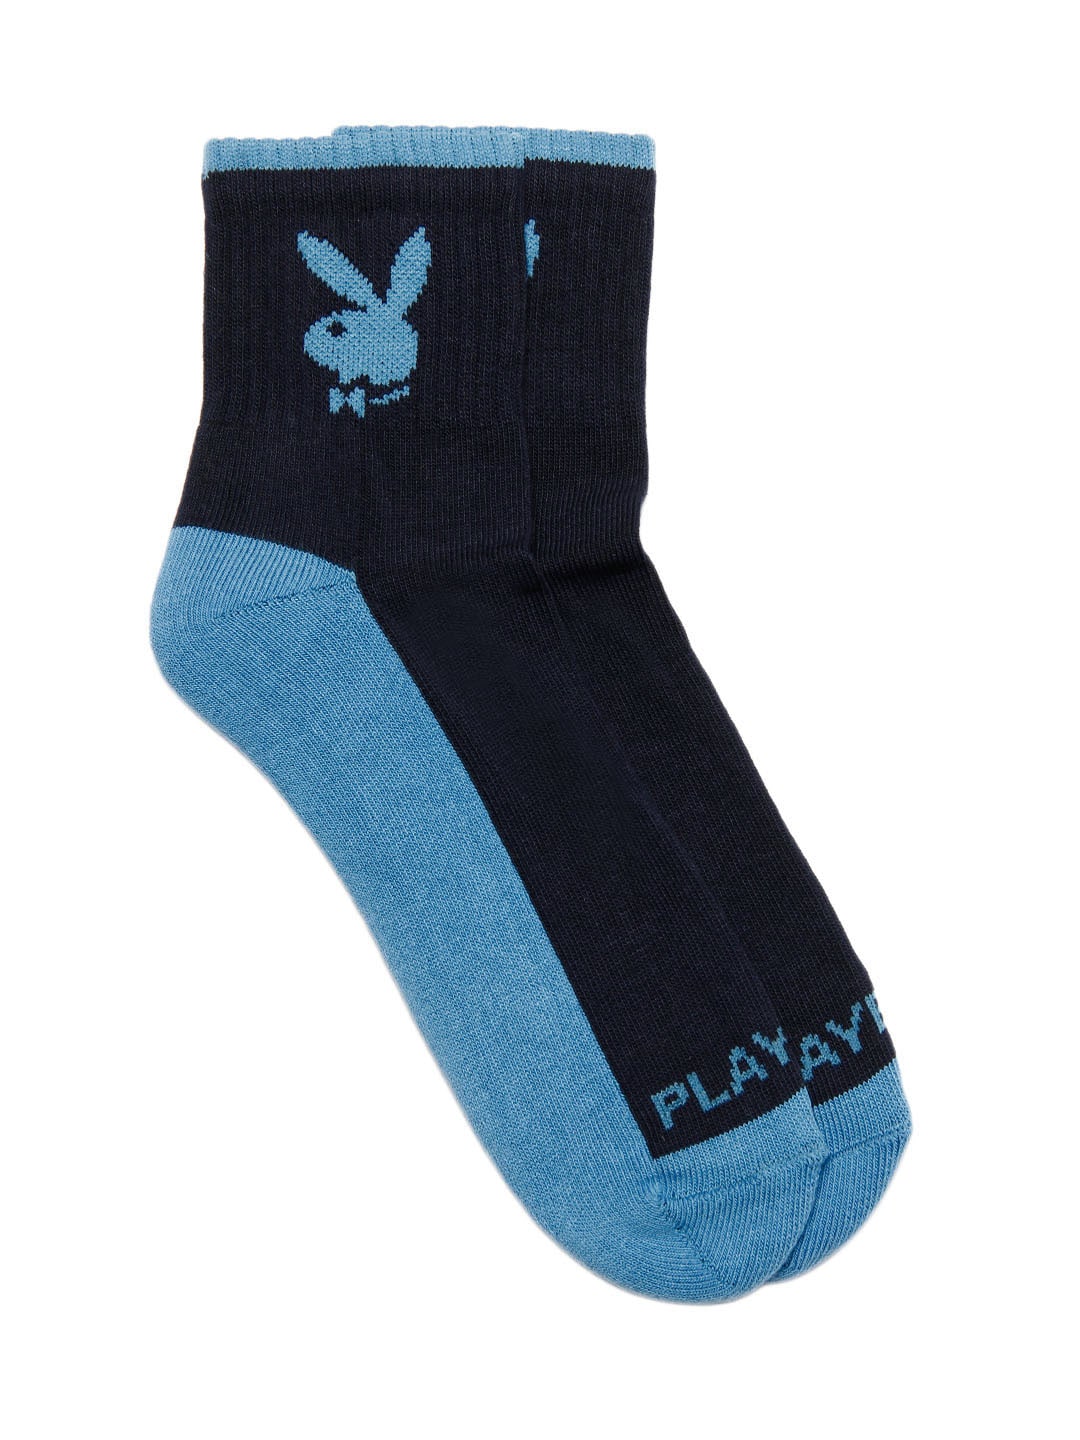 Playboy Men Blue Socks